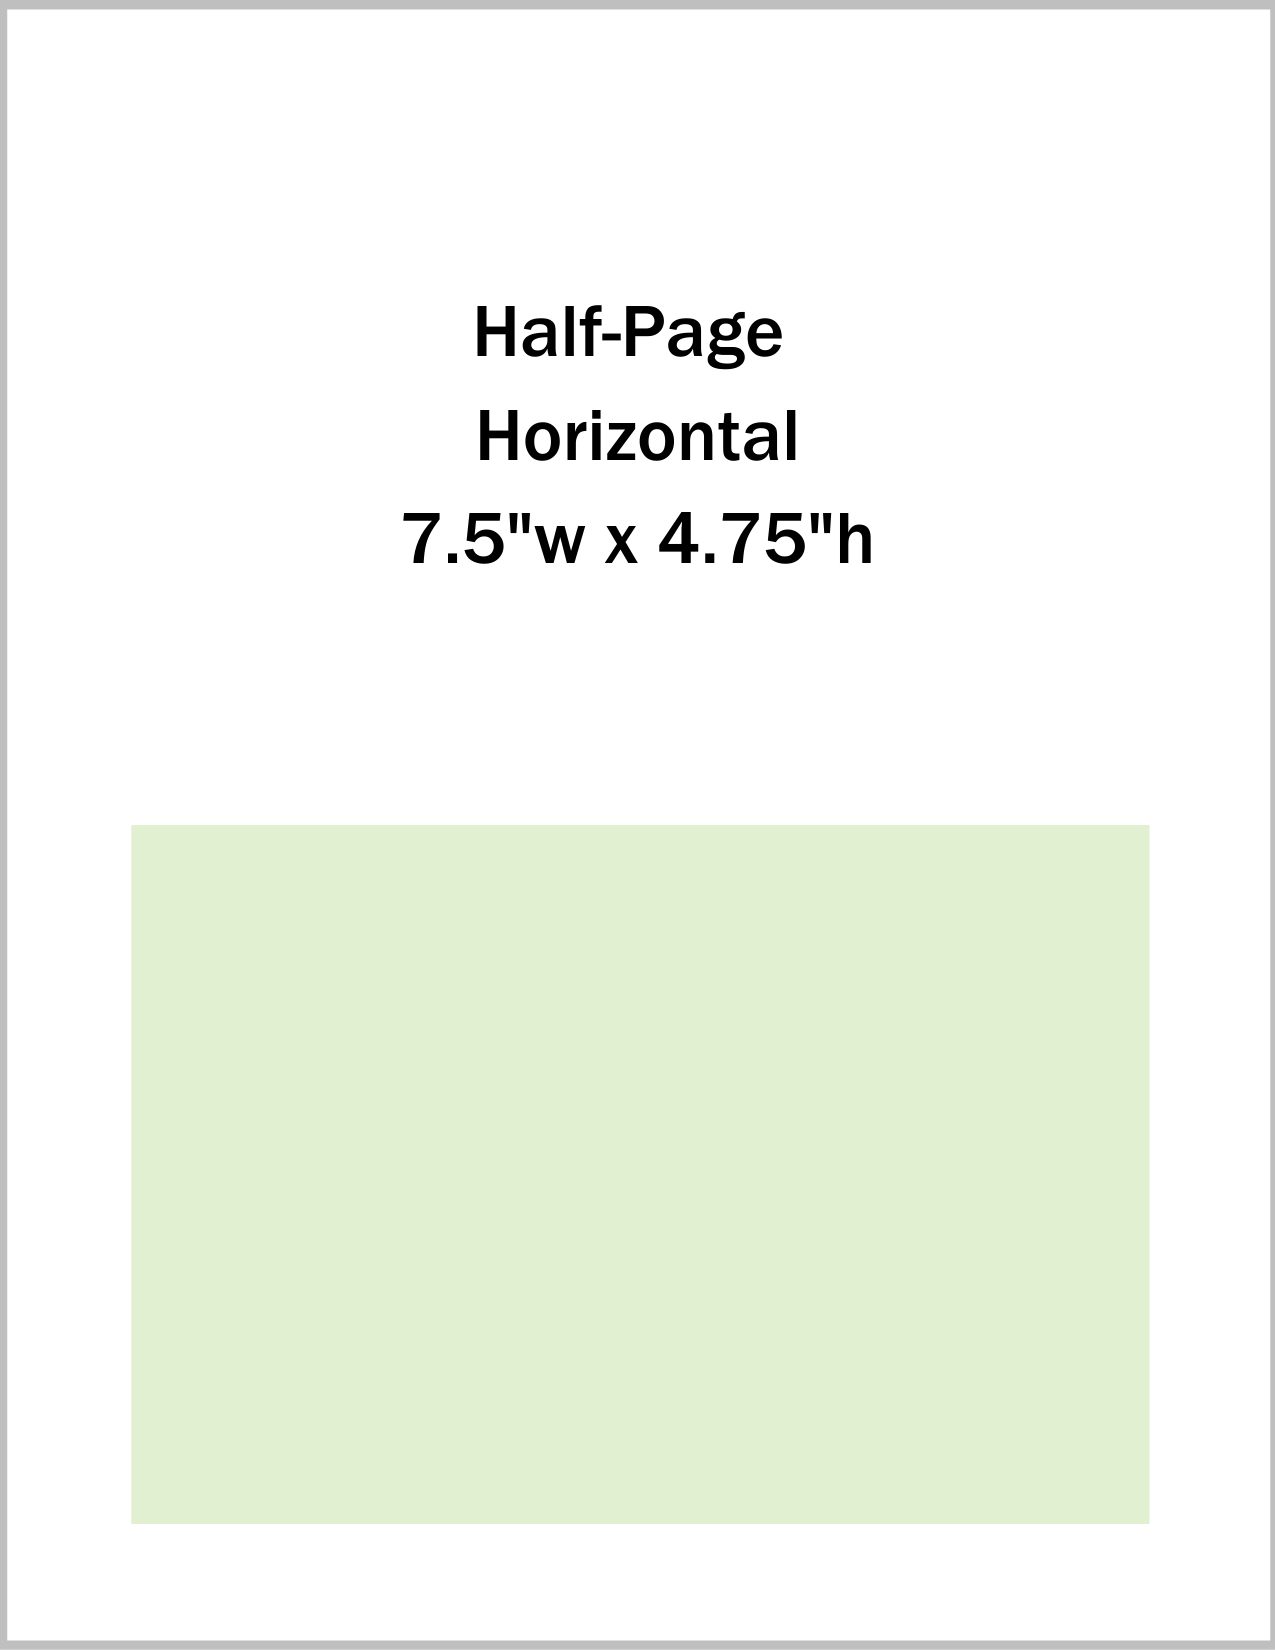 Half-Page Horizontal